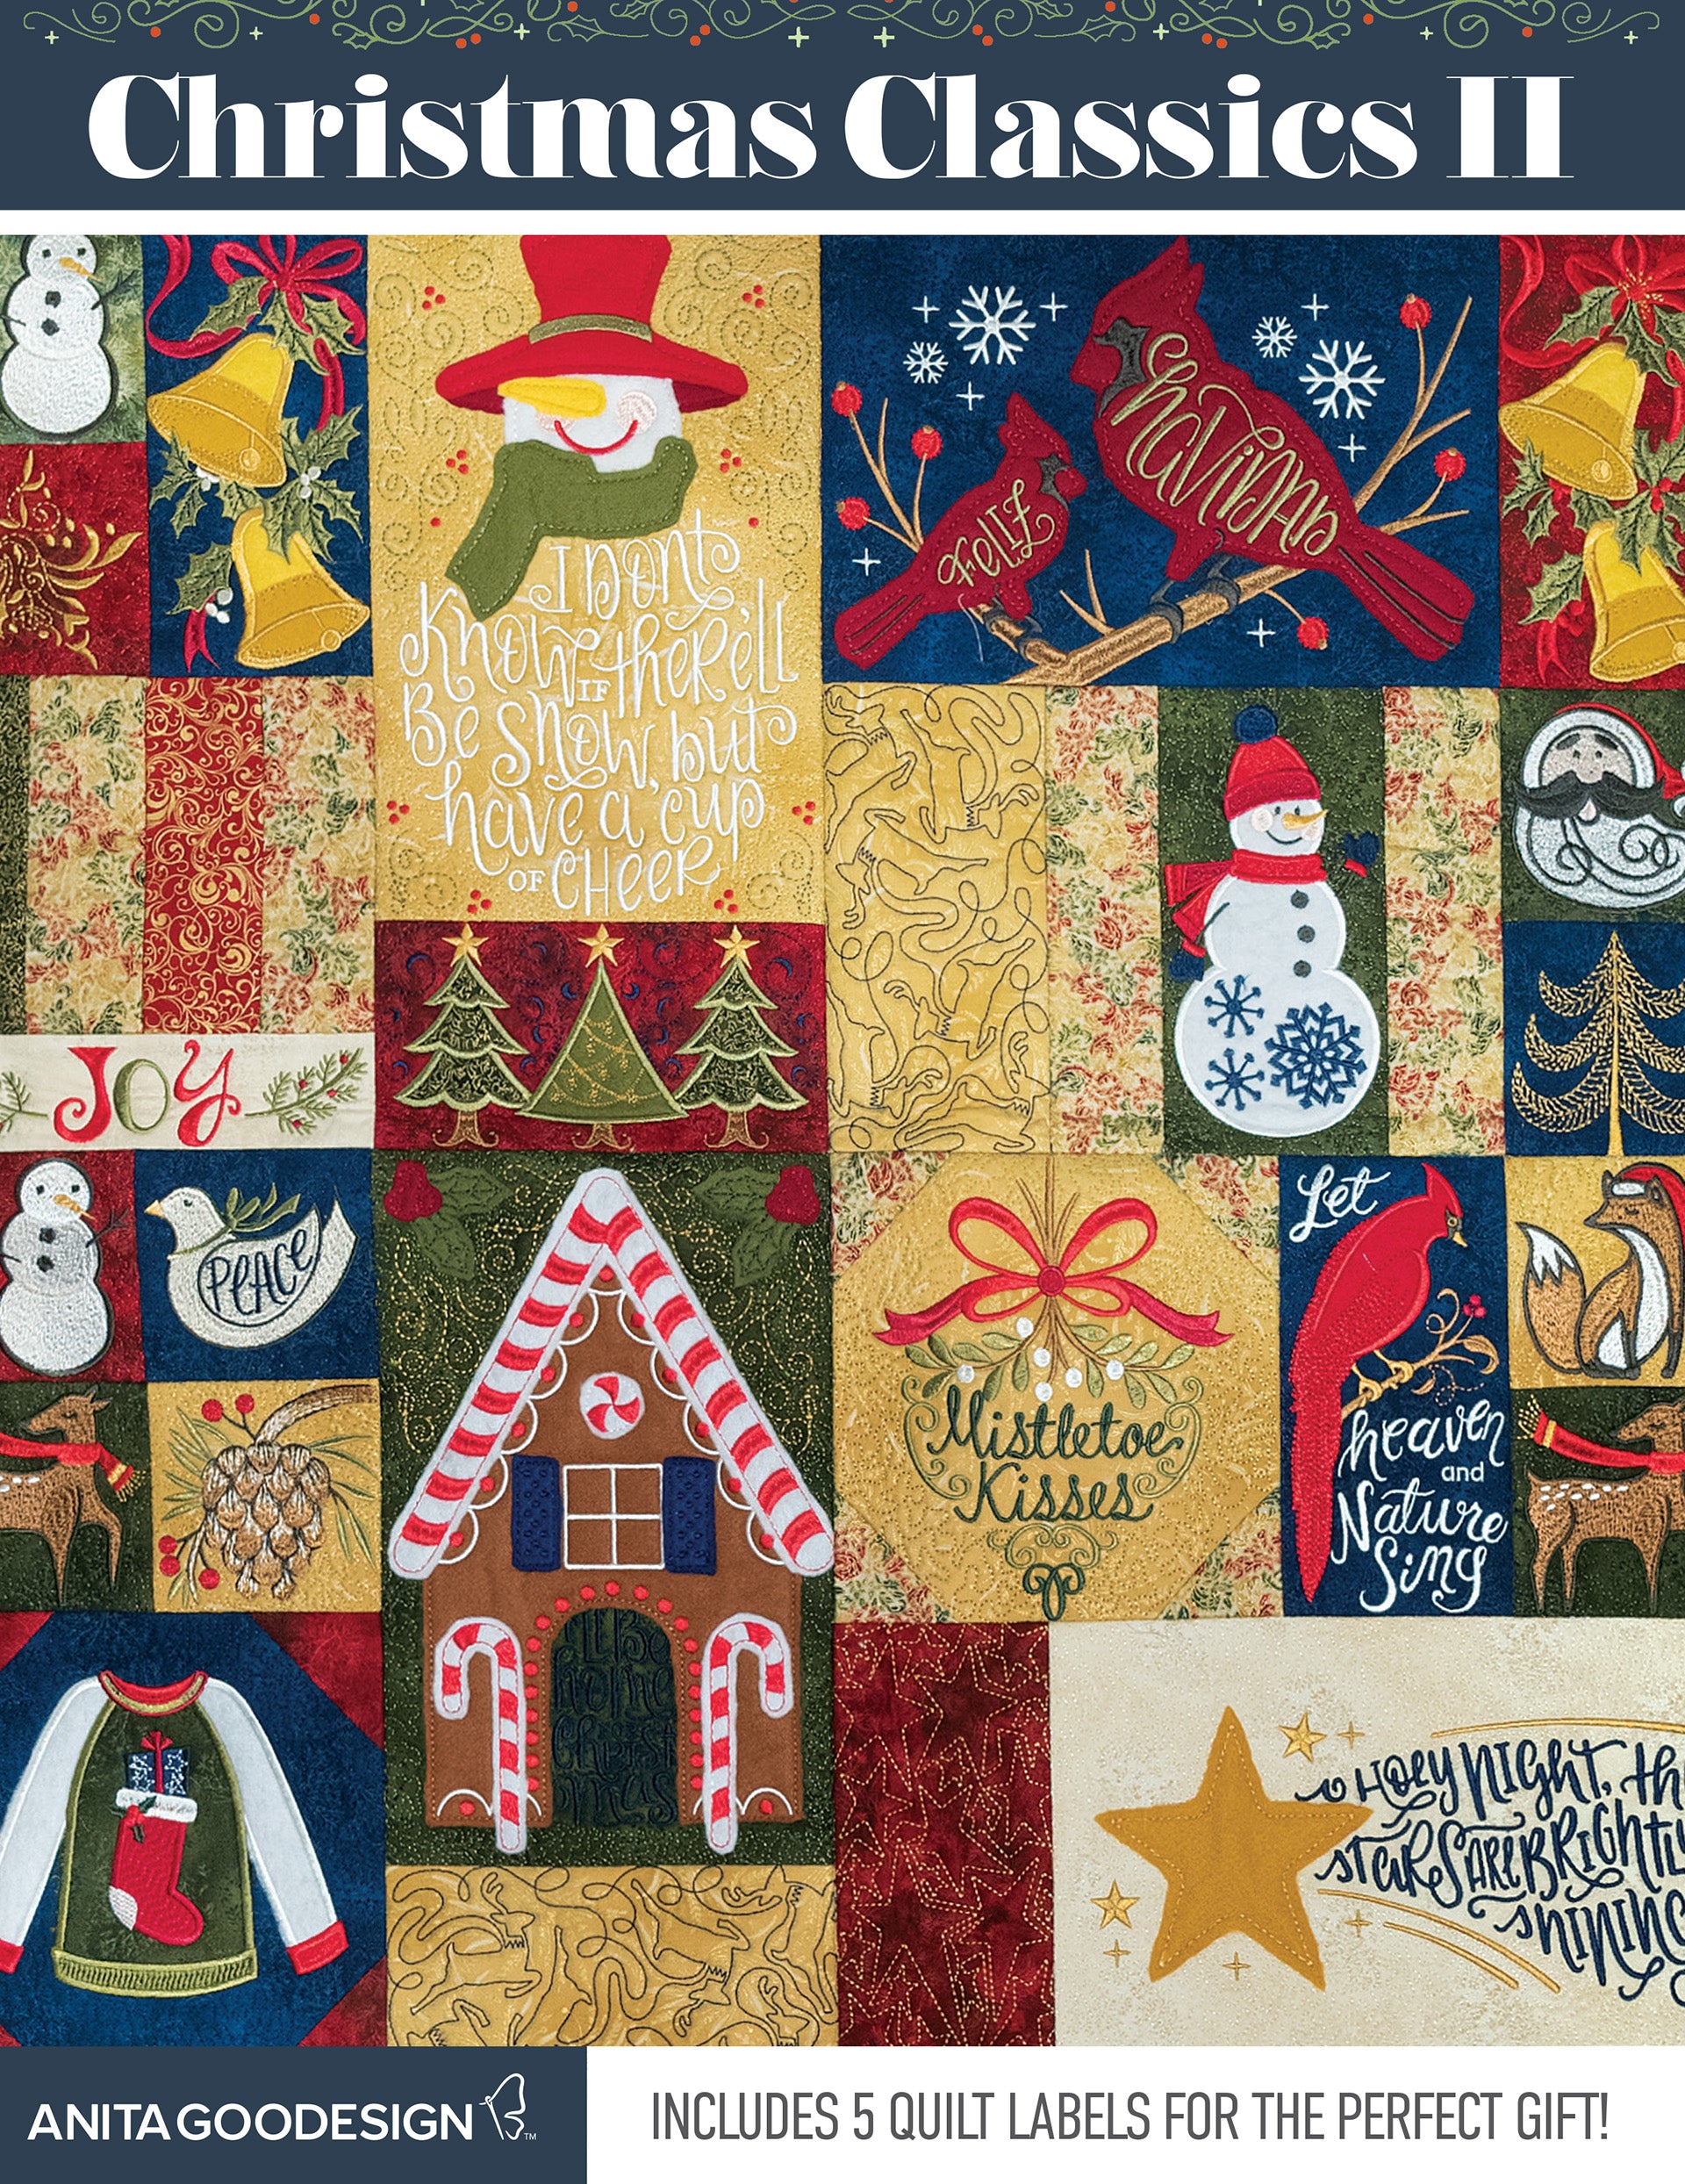 Confetti Christmas Coasters — Anita Goodesign